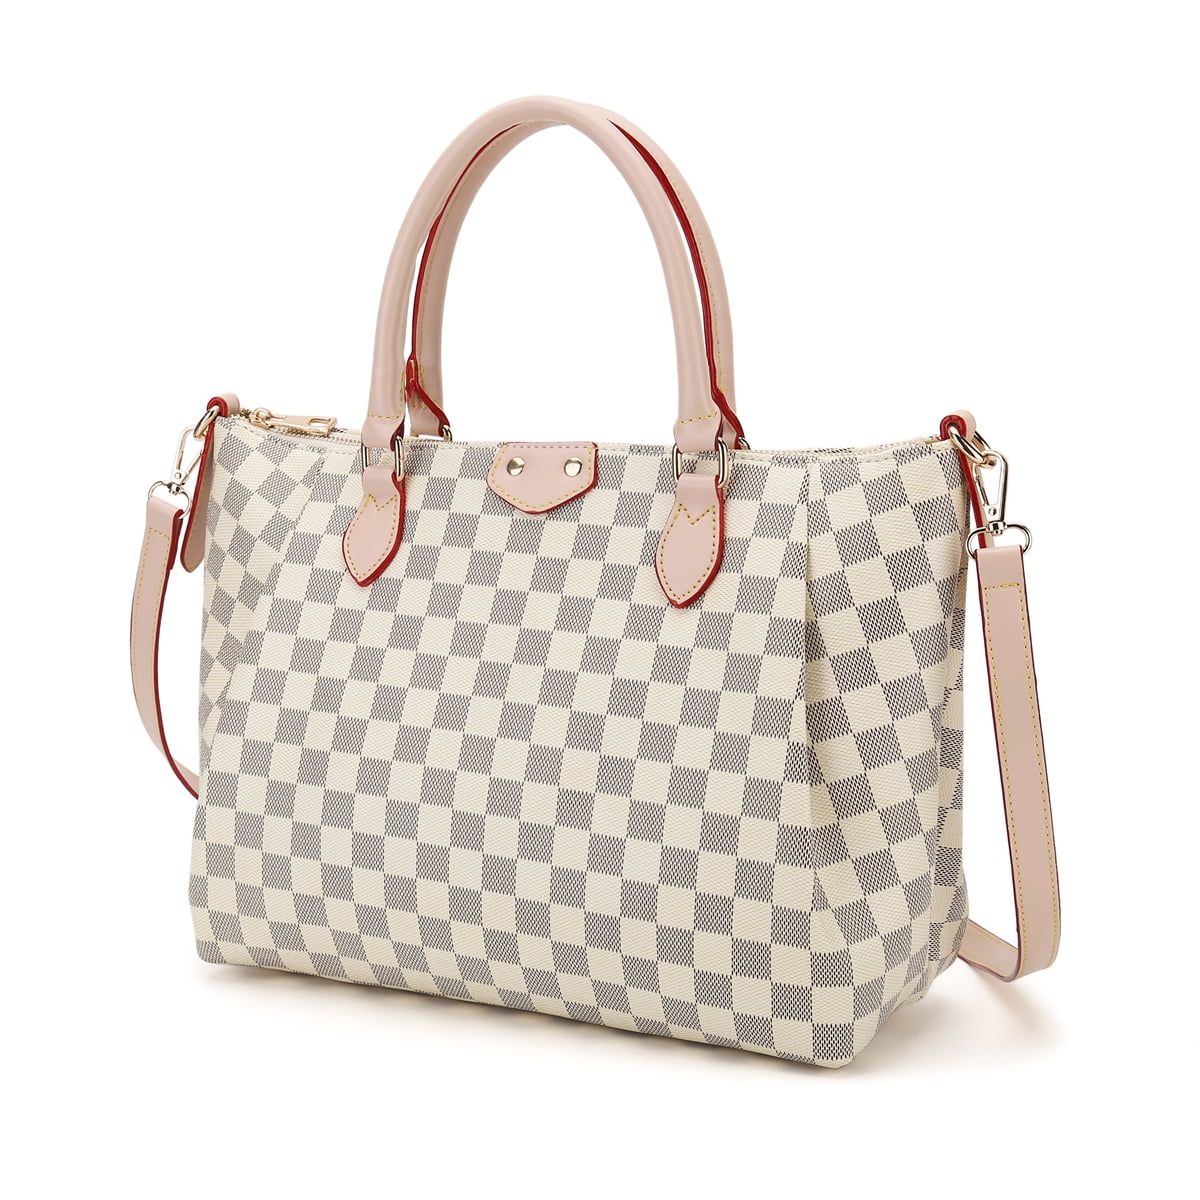 Twenty Four Women's Checkered Leather Handbag